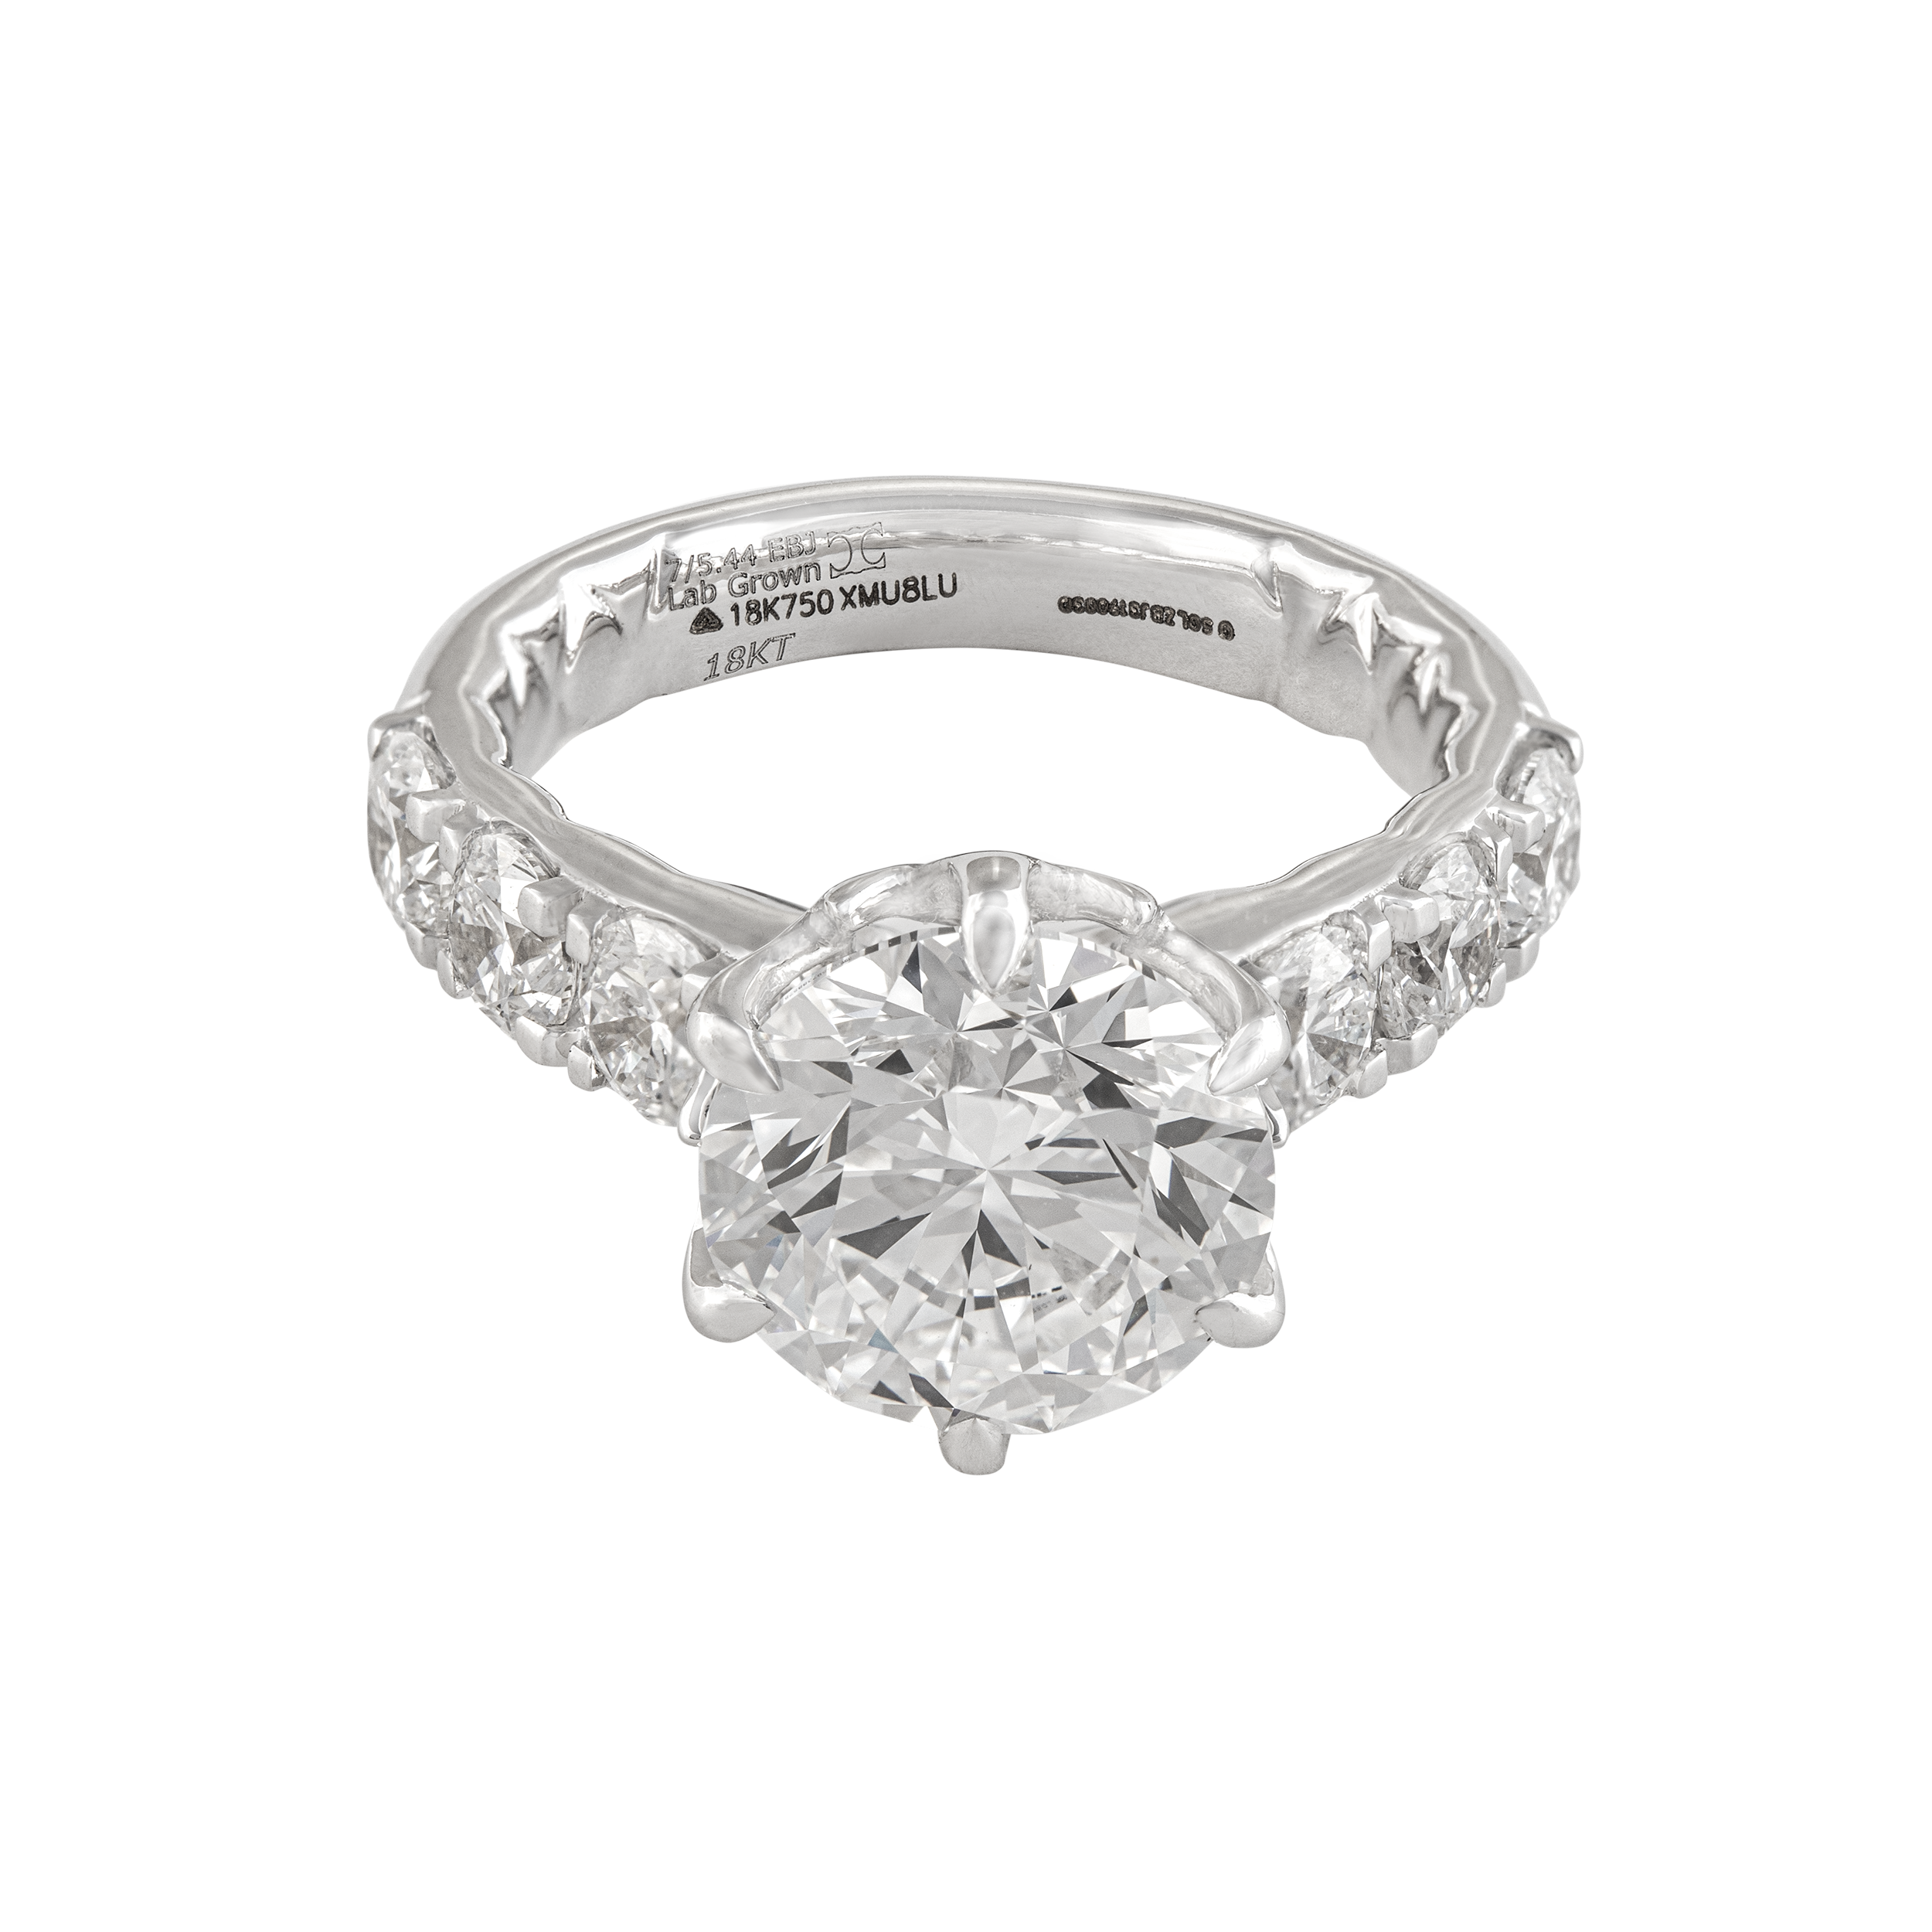 Exquisite Lab Grown Diamond Ring | SKU: 0019332000